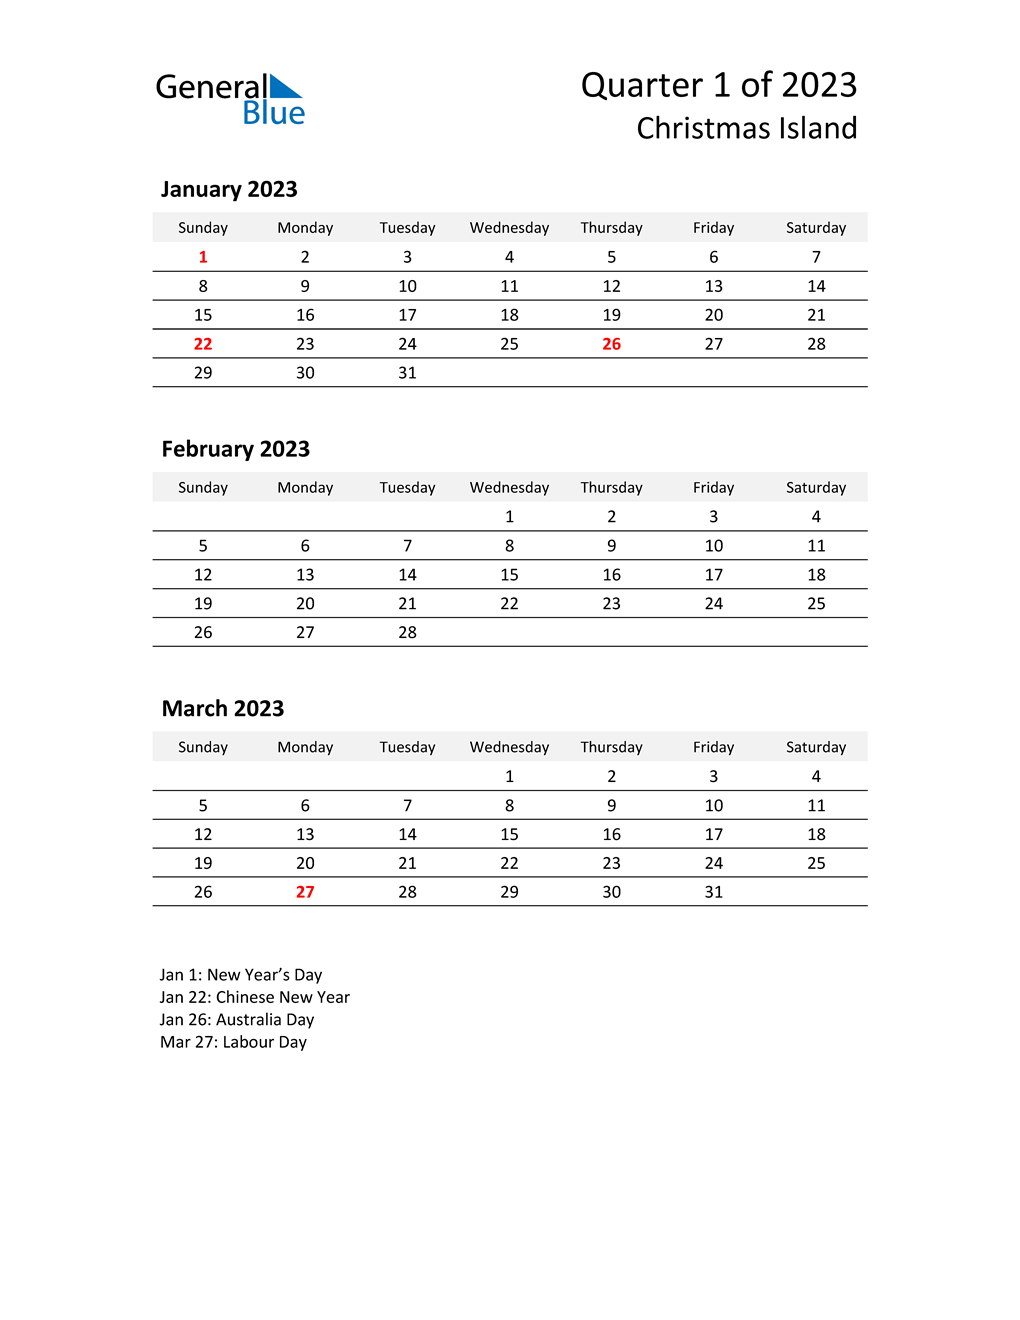  2023 Three-Month Calendar for Christmas Island